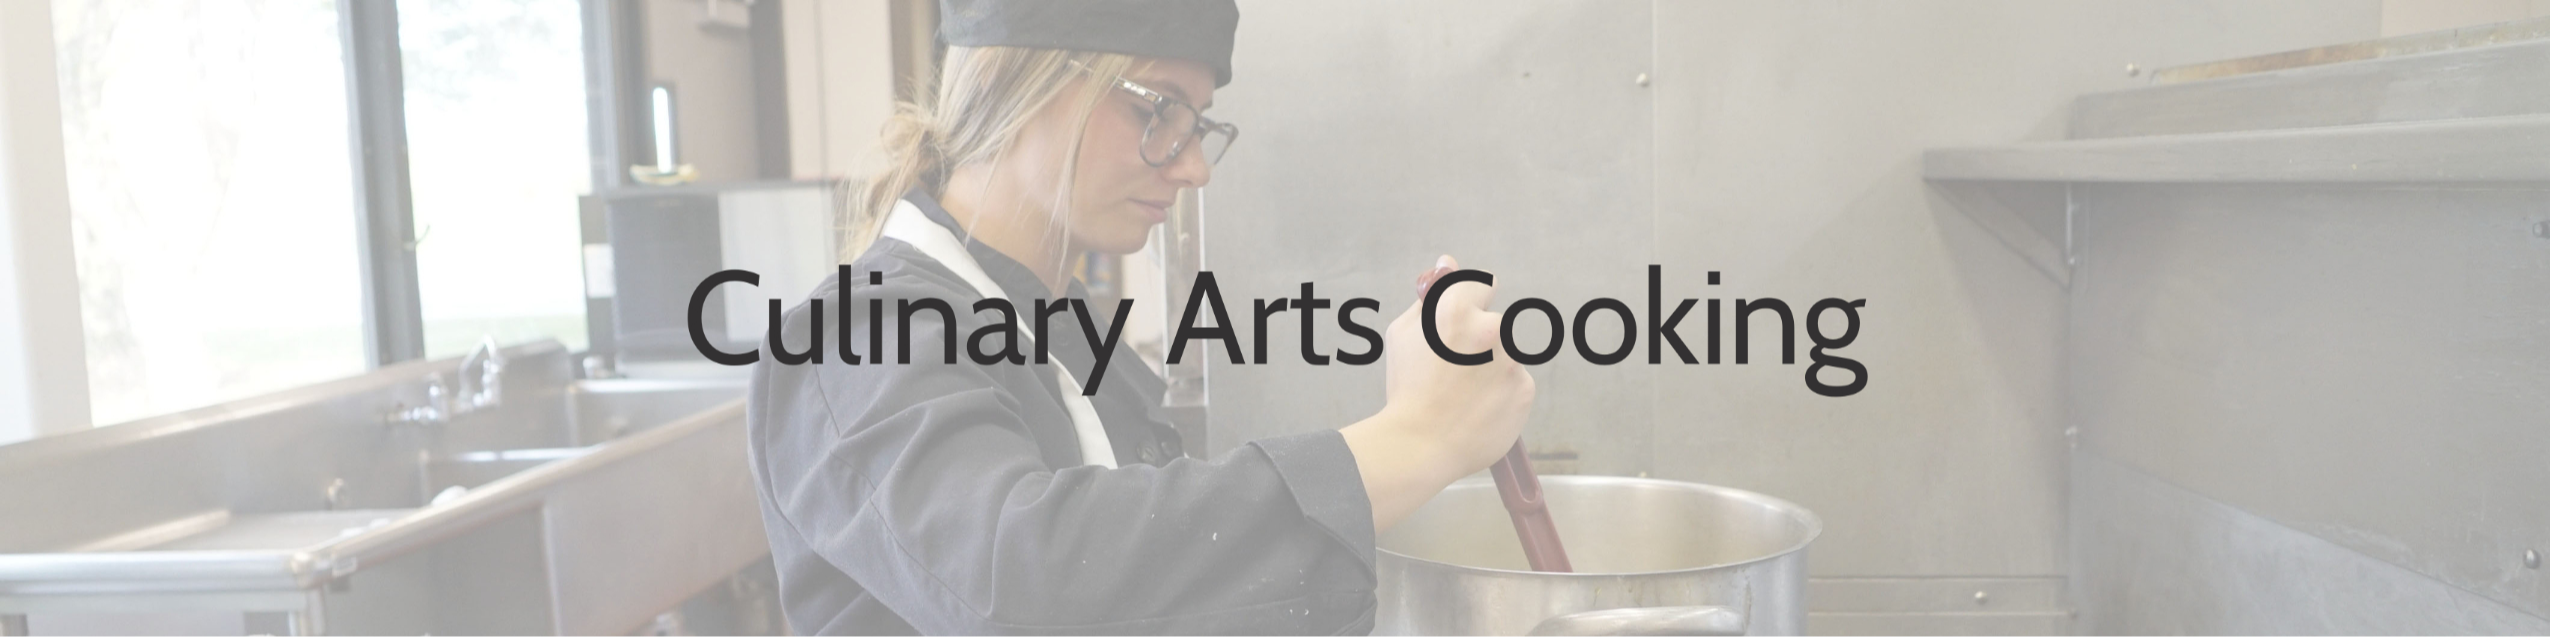 Culinary Arts/Cooking header